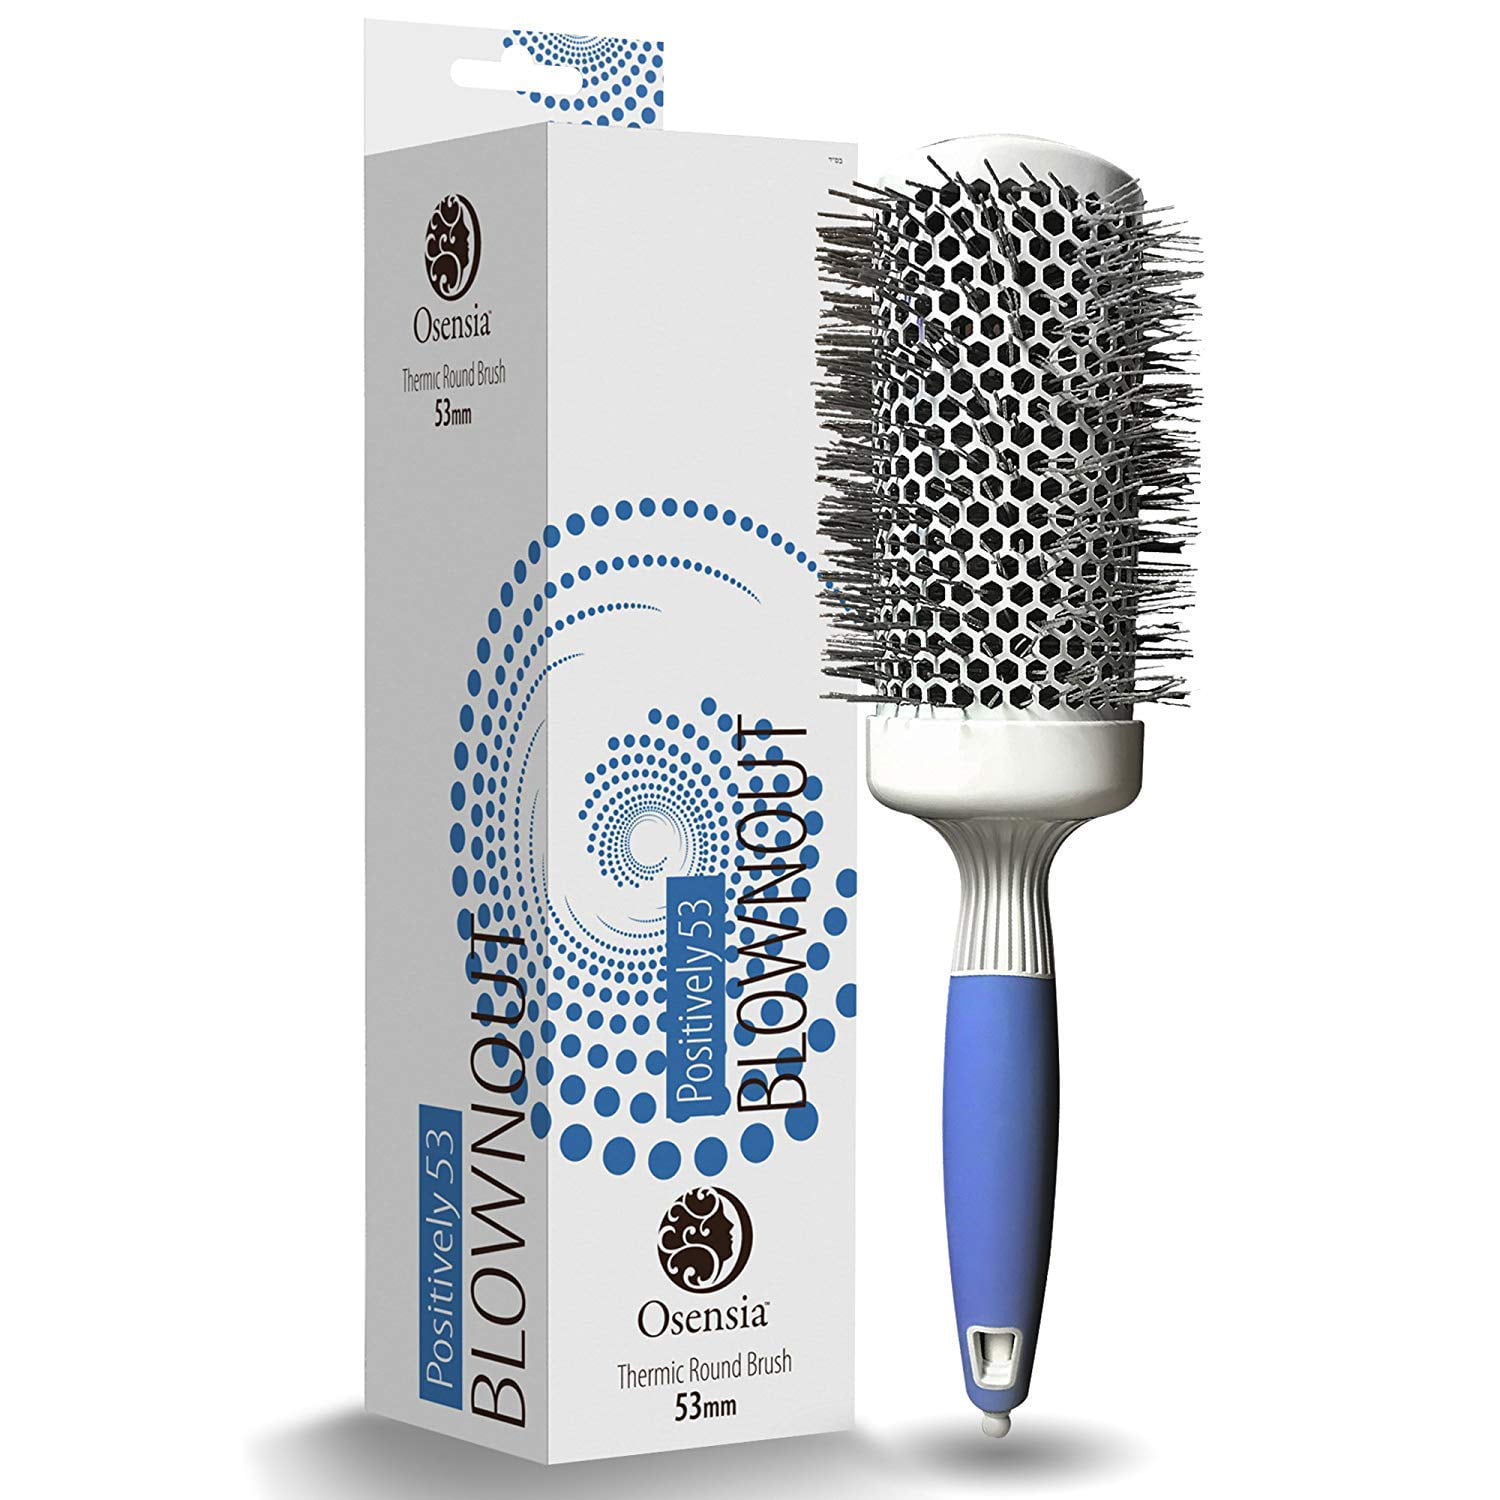 Щётка XL Pro large керамическая. Max Pro Ceramic Round hair Dryer Brush. Round Ceramic Brush. Round Brush for hair.